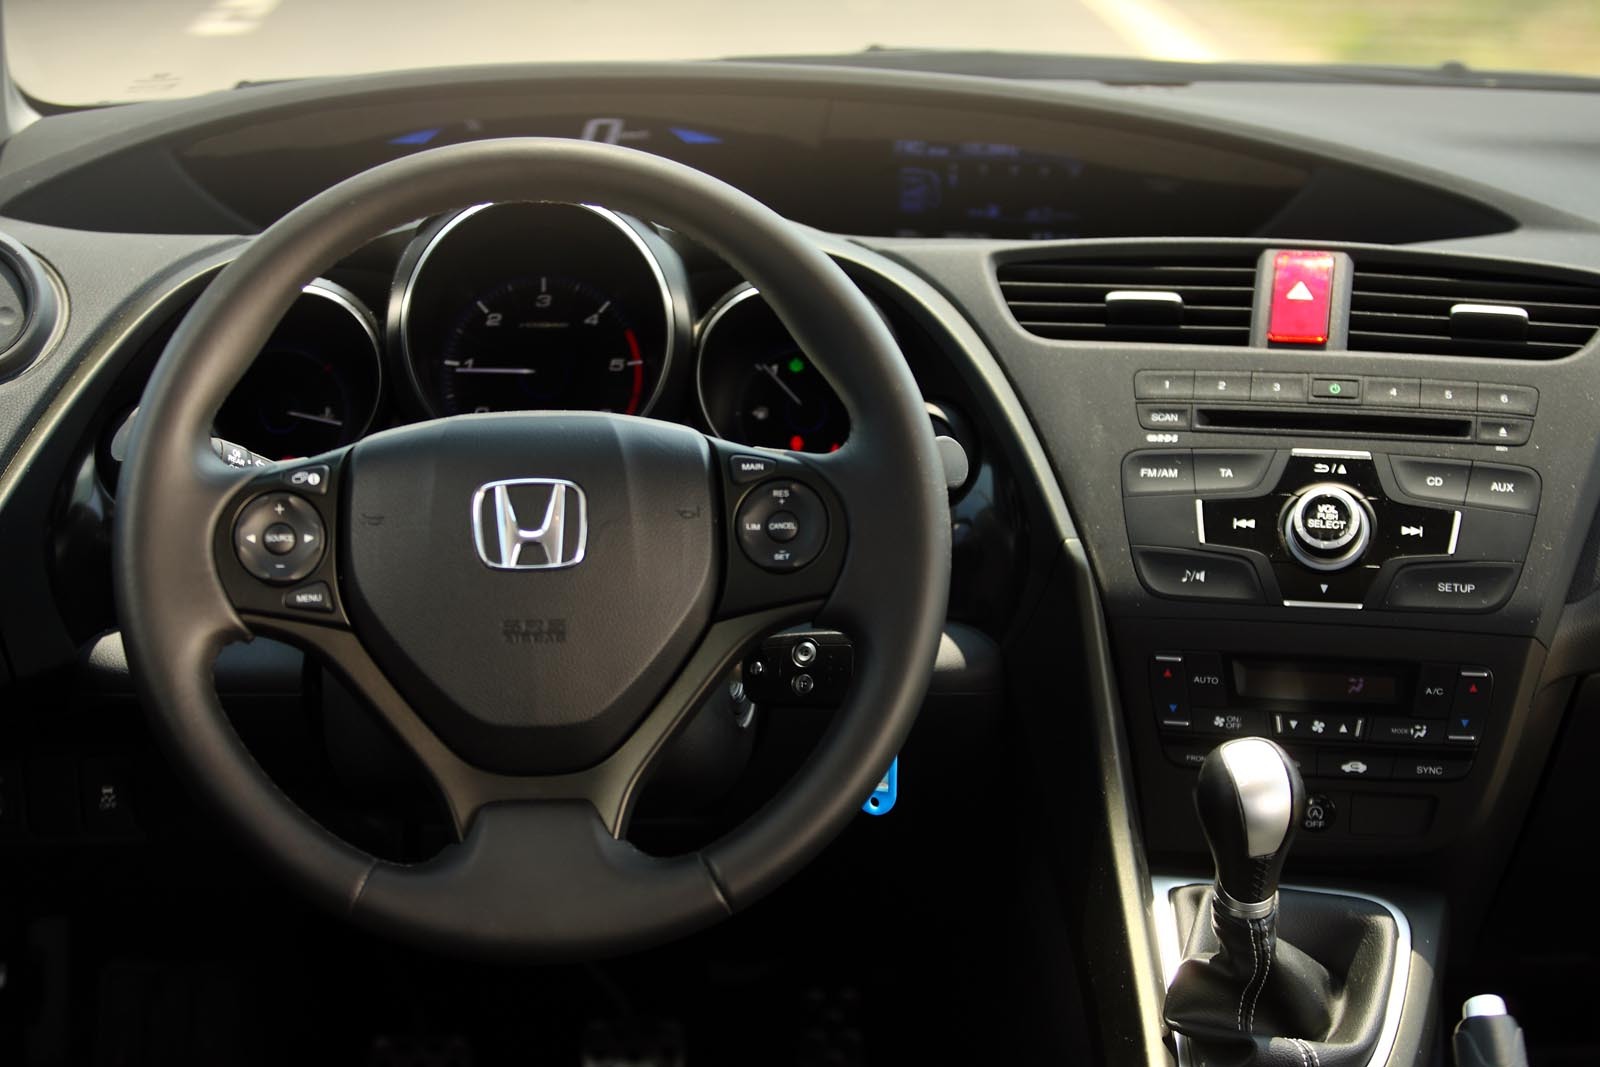 In echiparea sport, Honda Civic are doar butoane mari pentru audio pe consola centrala